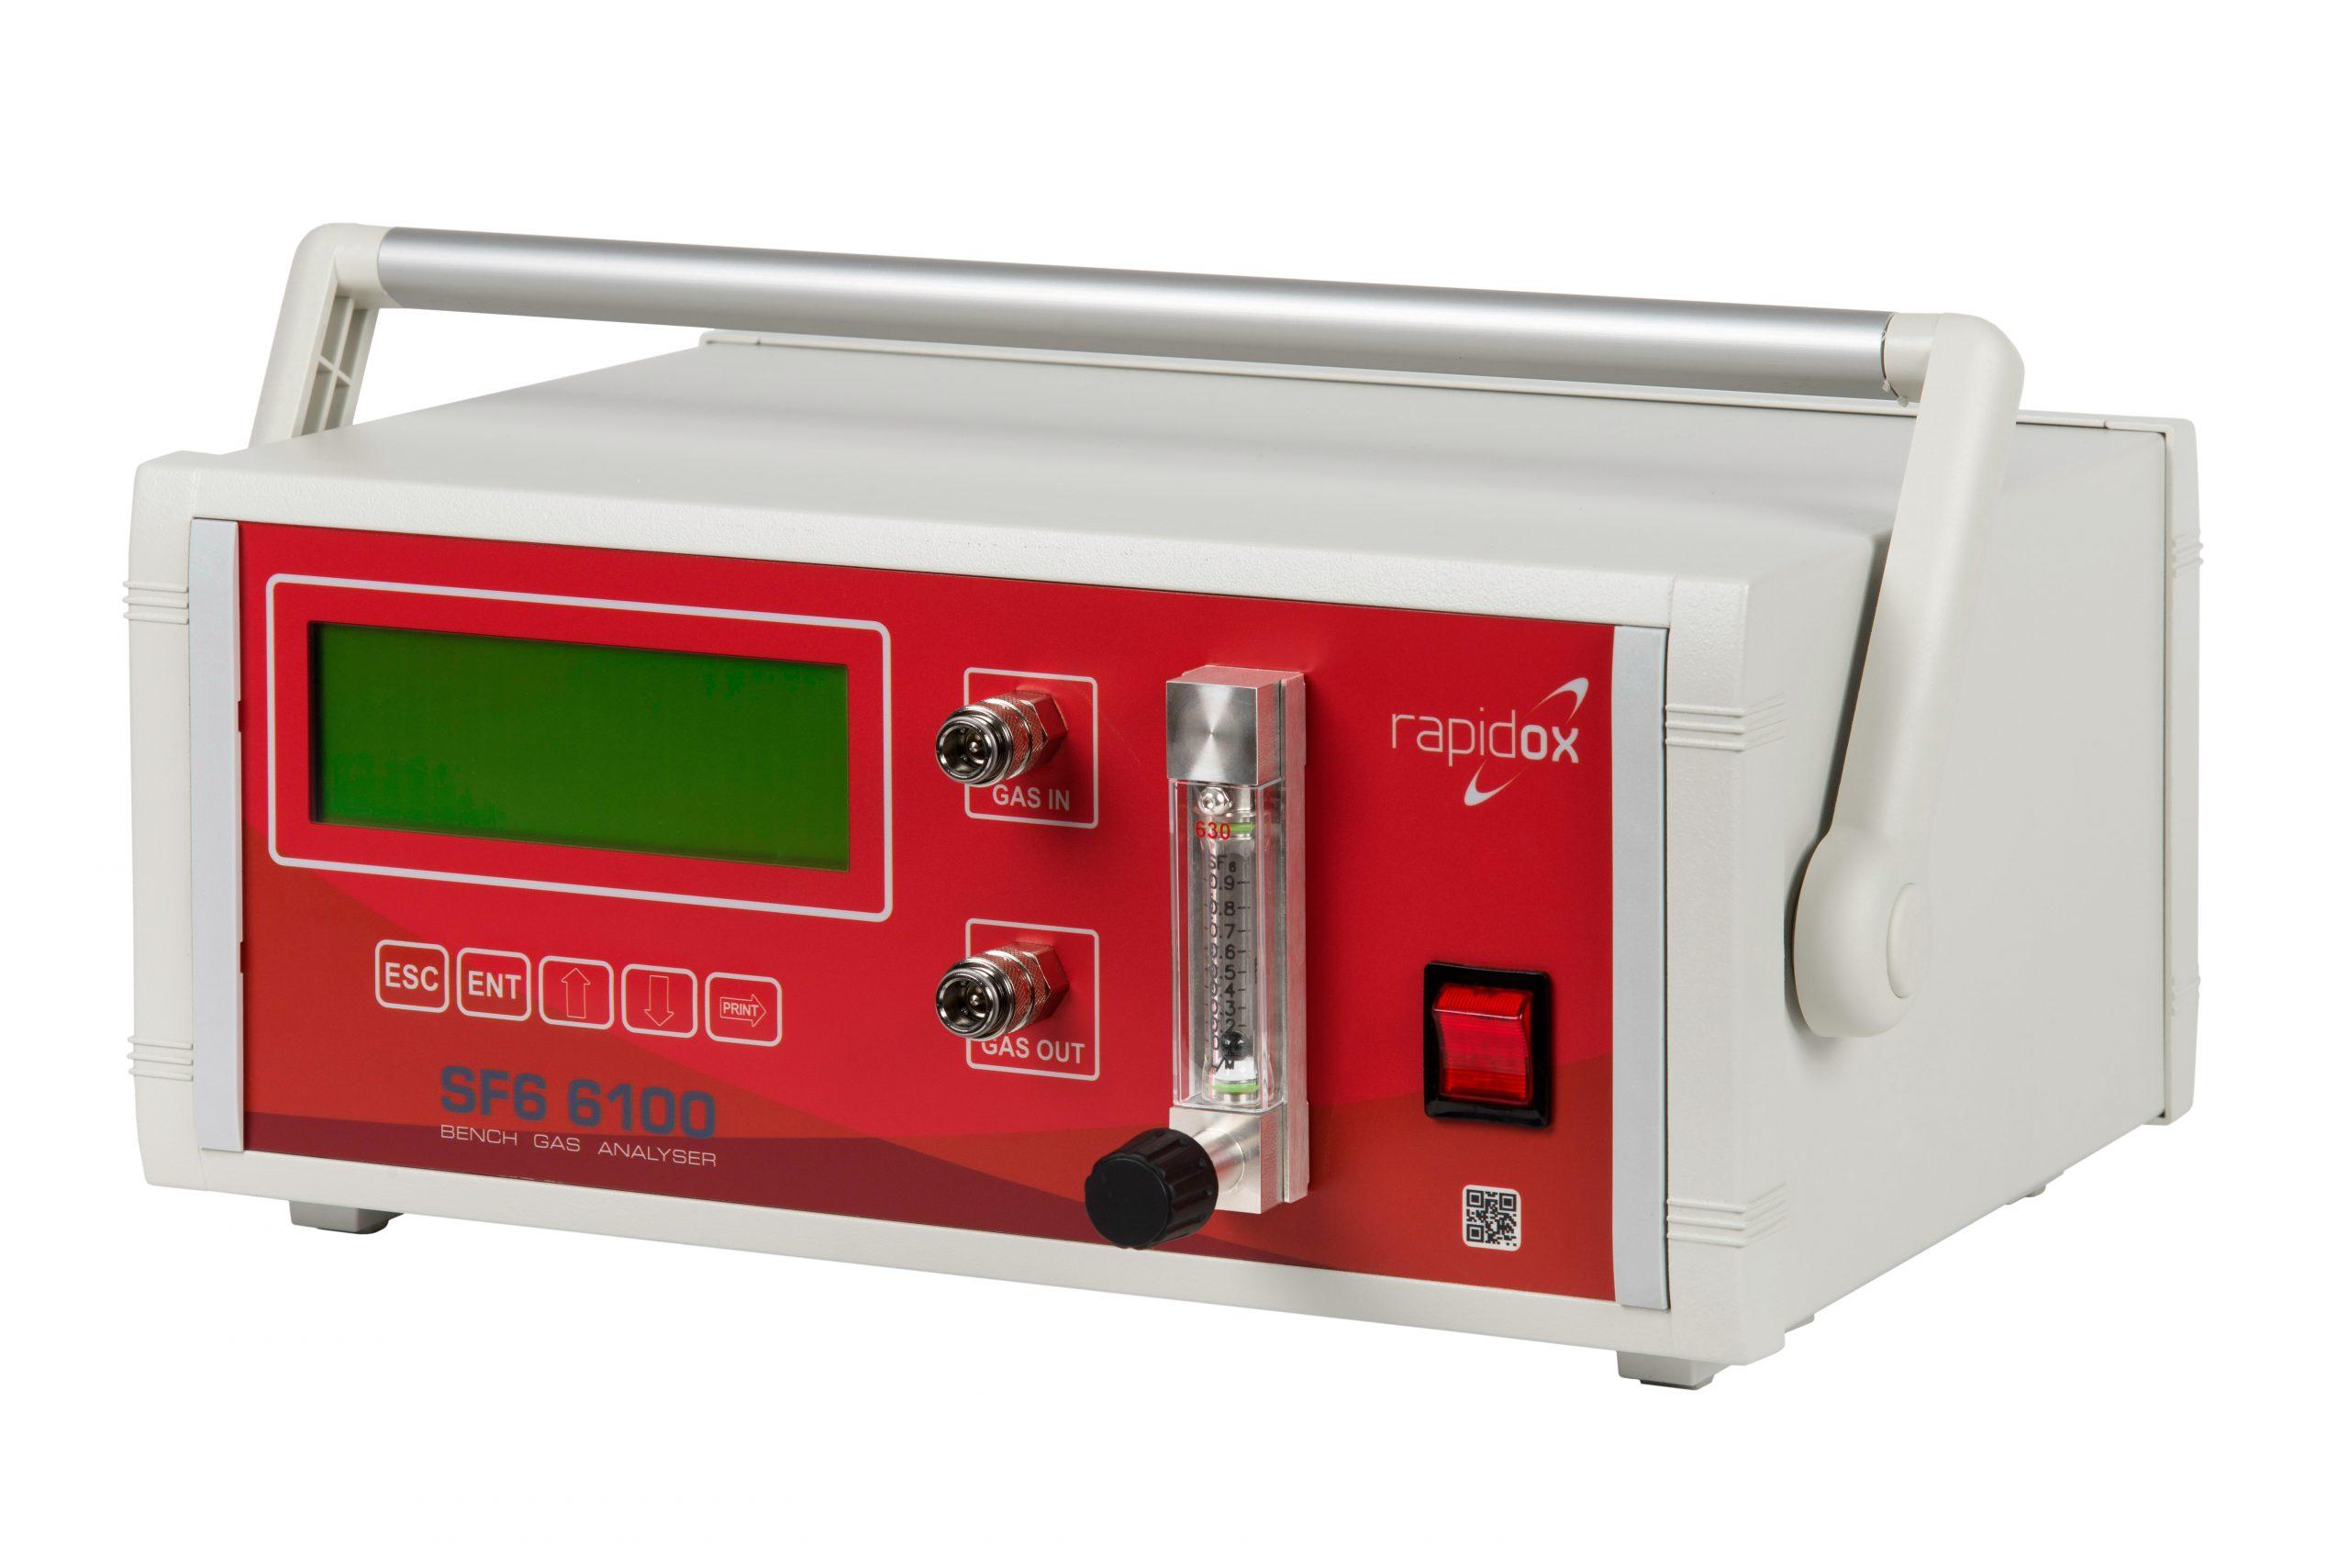 Product Rapidox SF₆ 6100 Bench Gas Analyser - RapidoxSF6 image